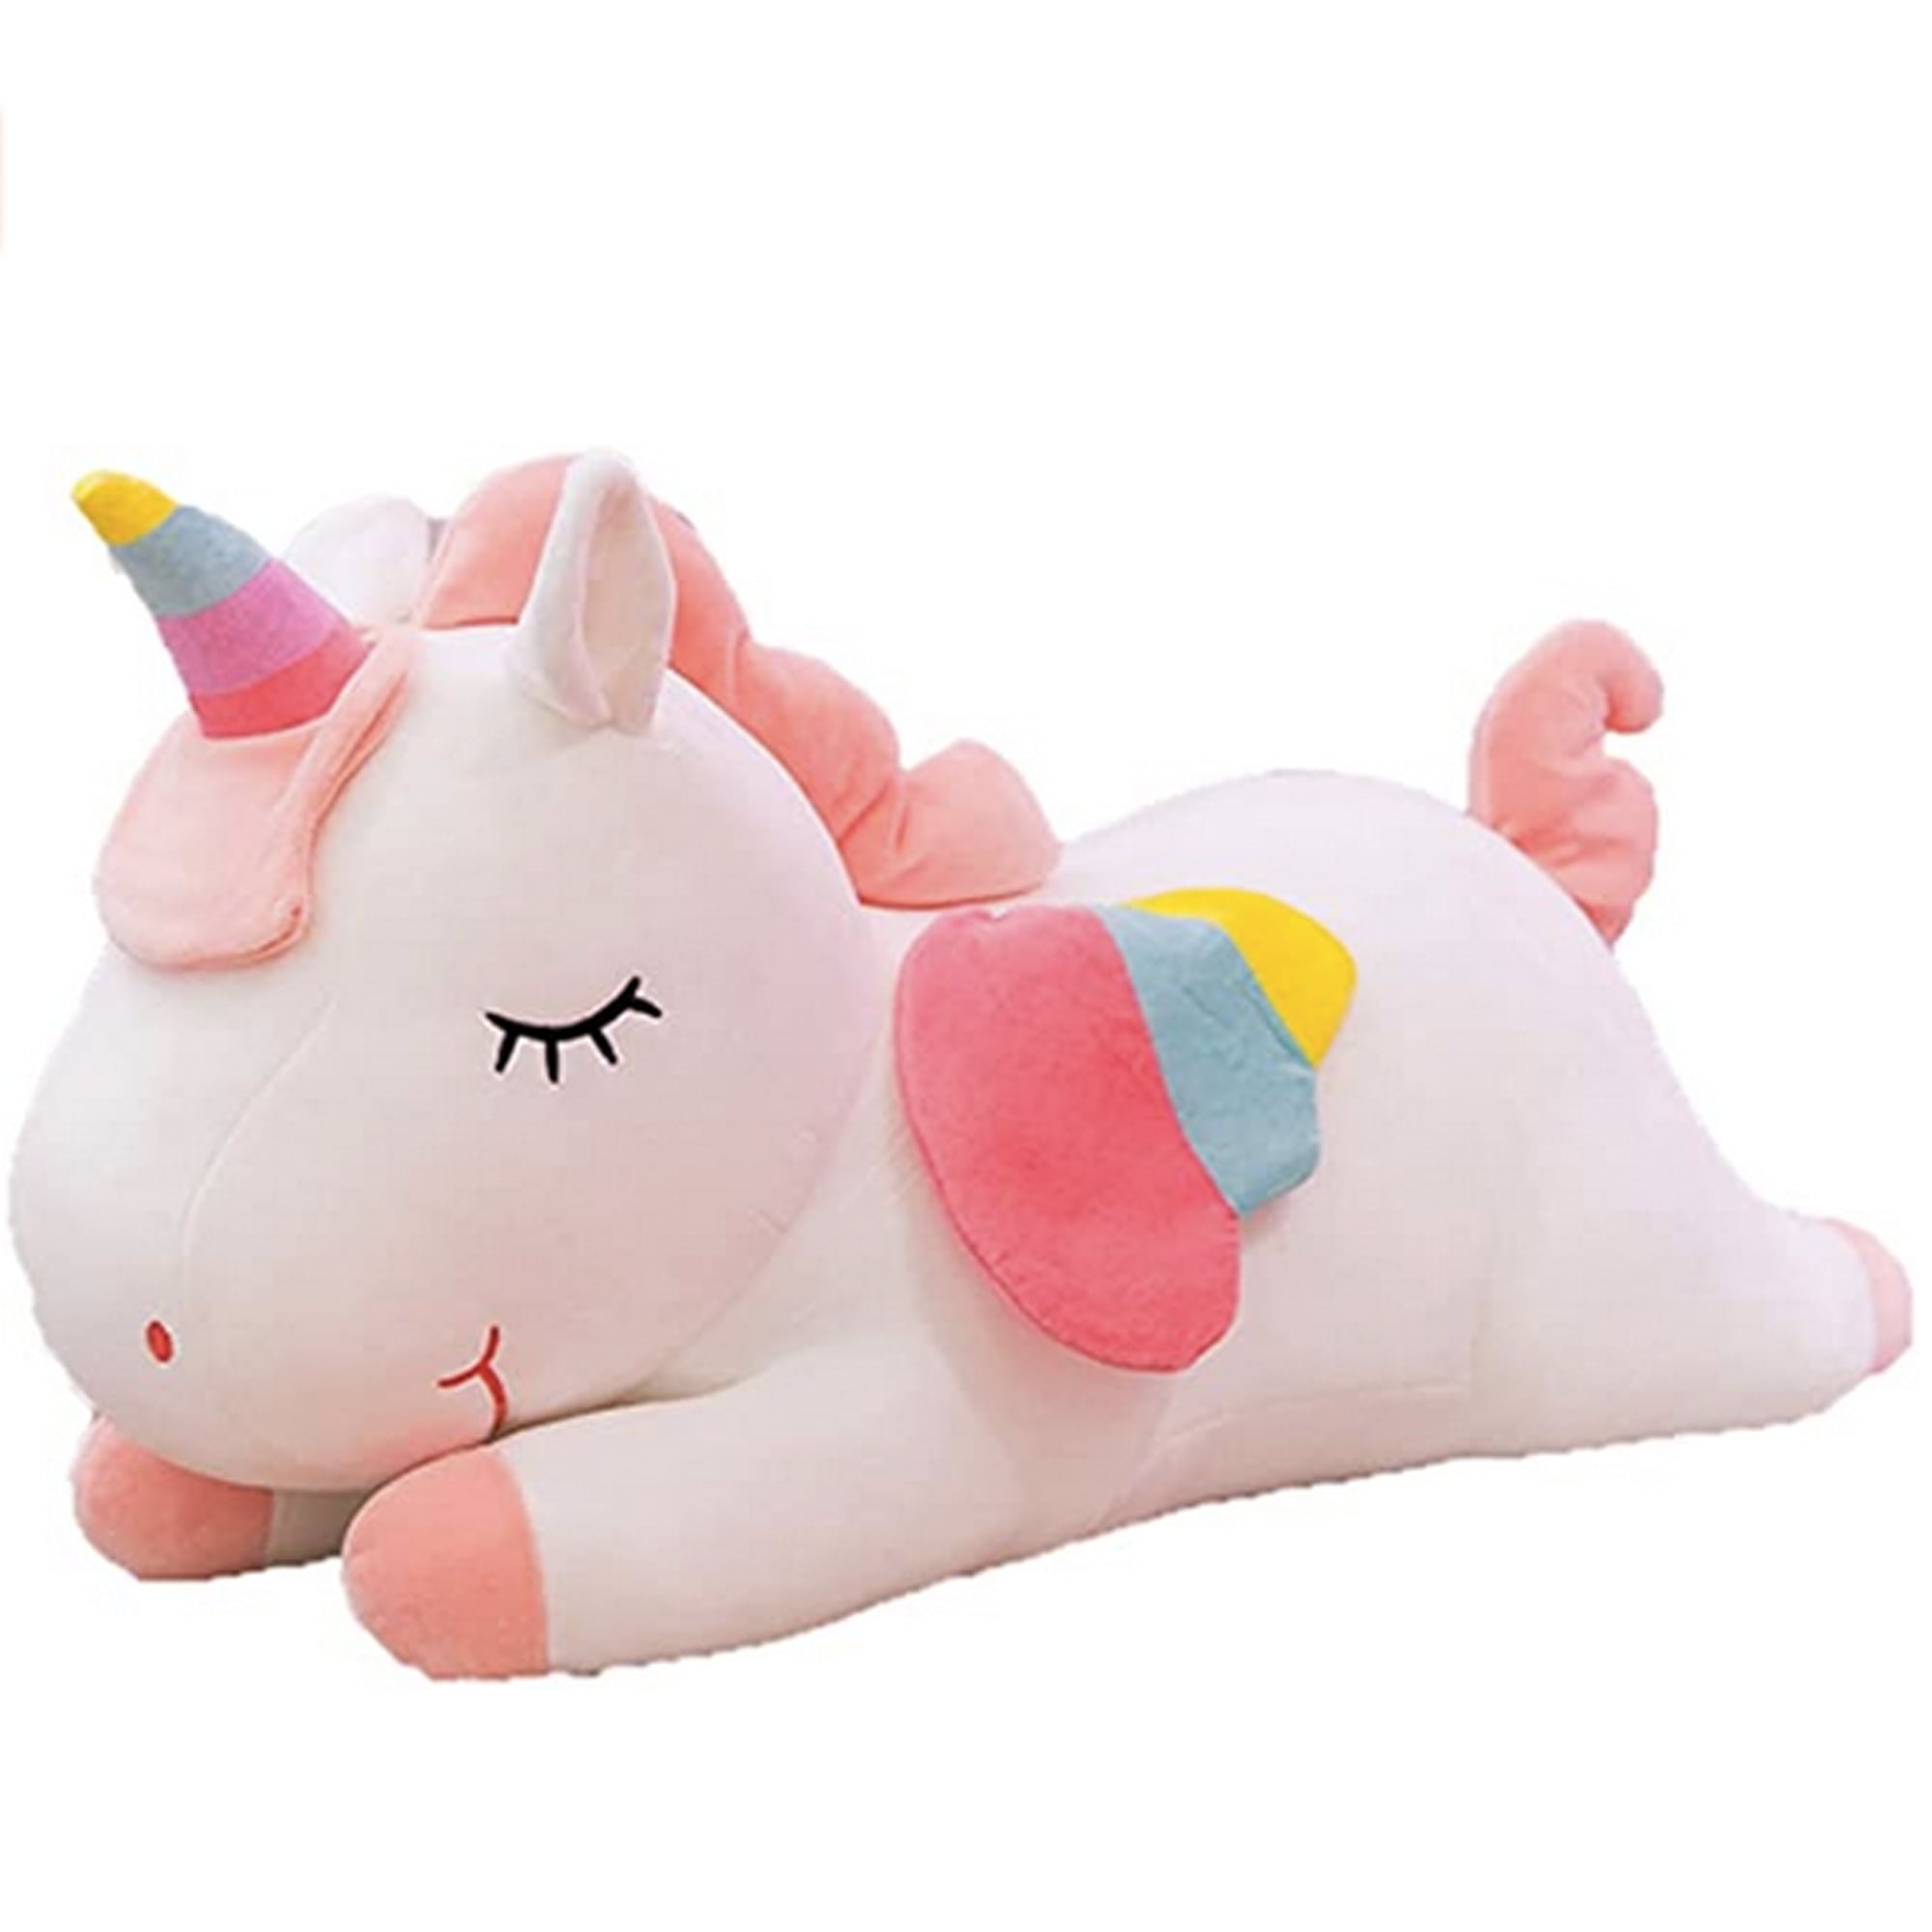 80cm large Teddy Bear Pink unicorn soft toy kids plush cuddle toy bed buddy gift 